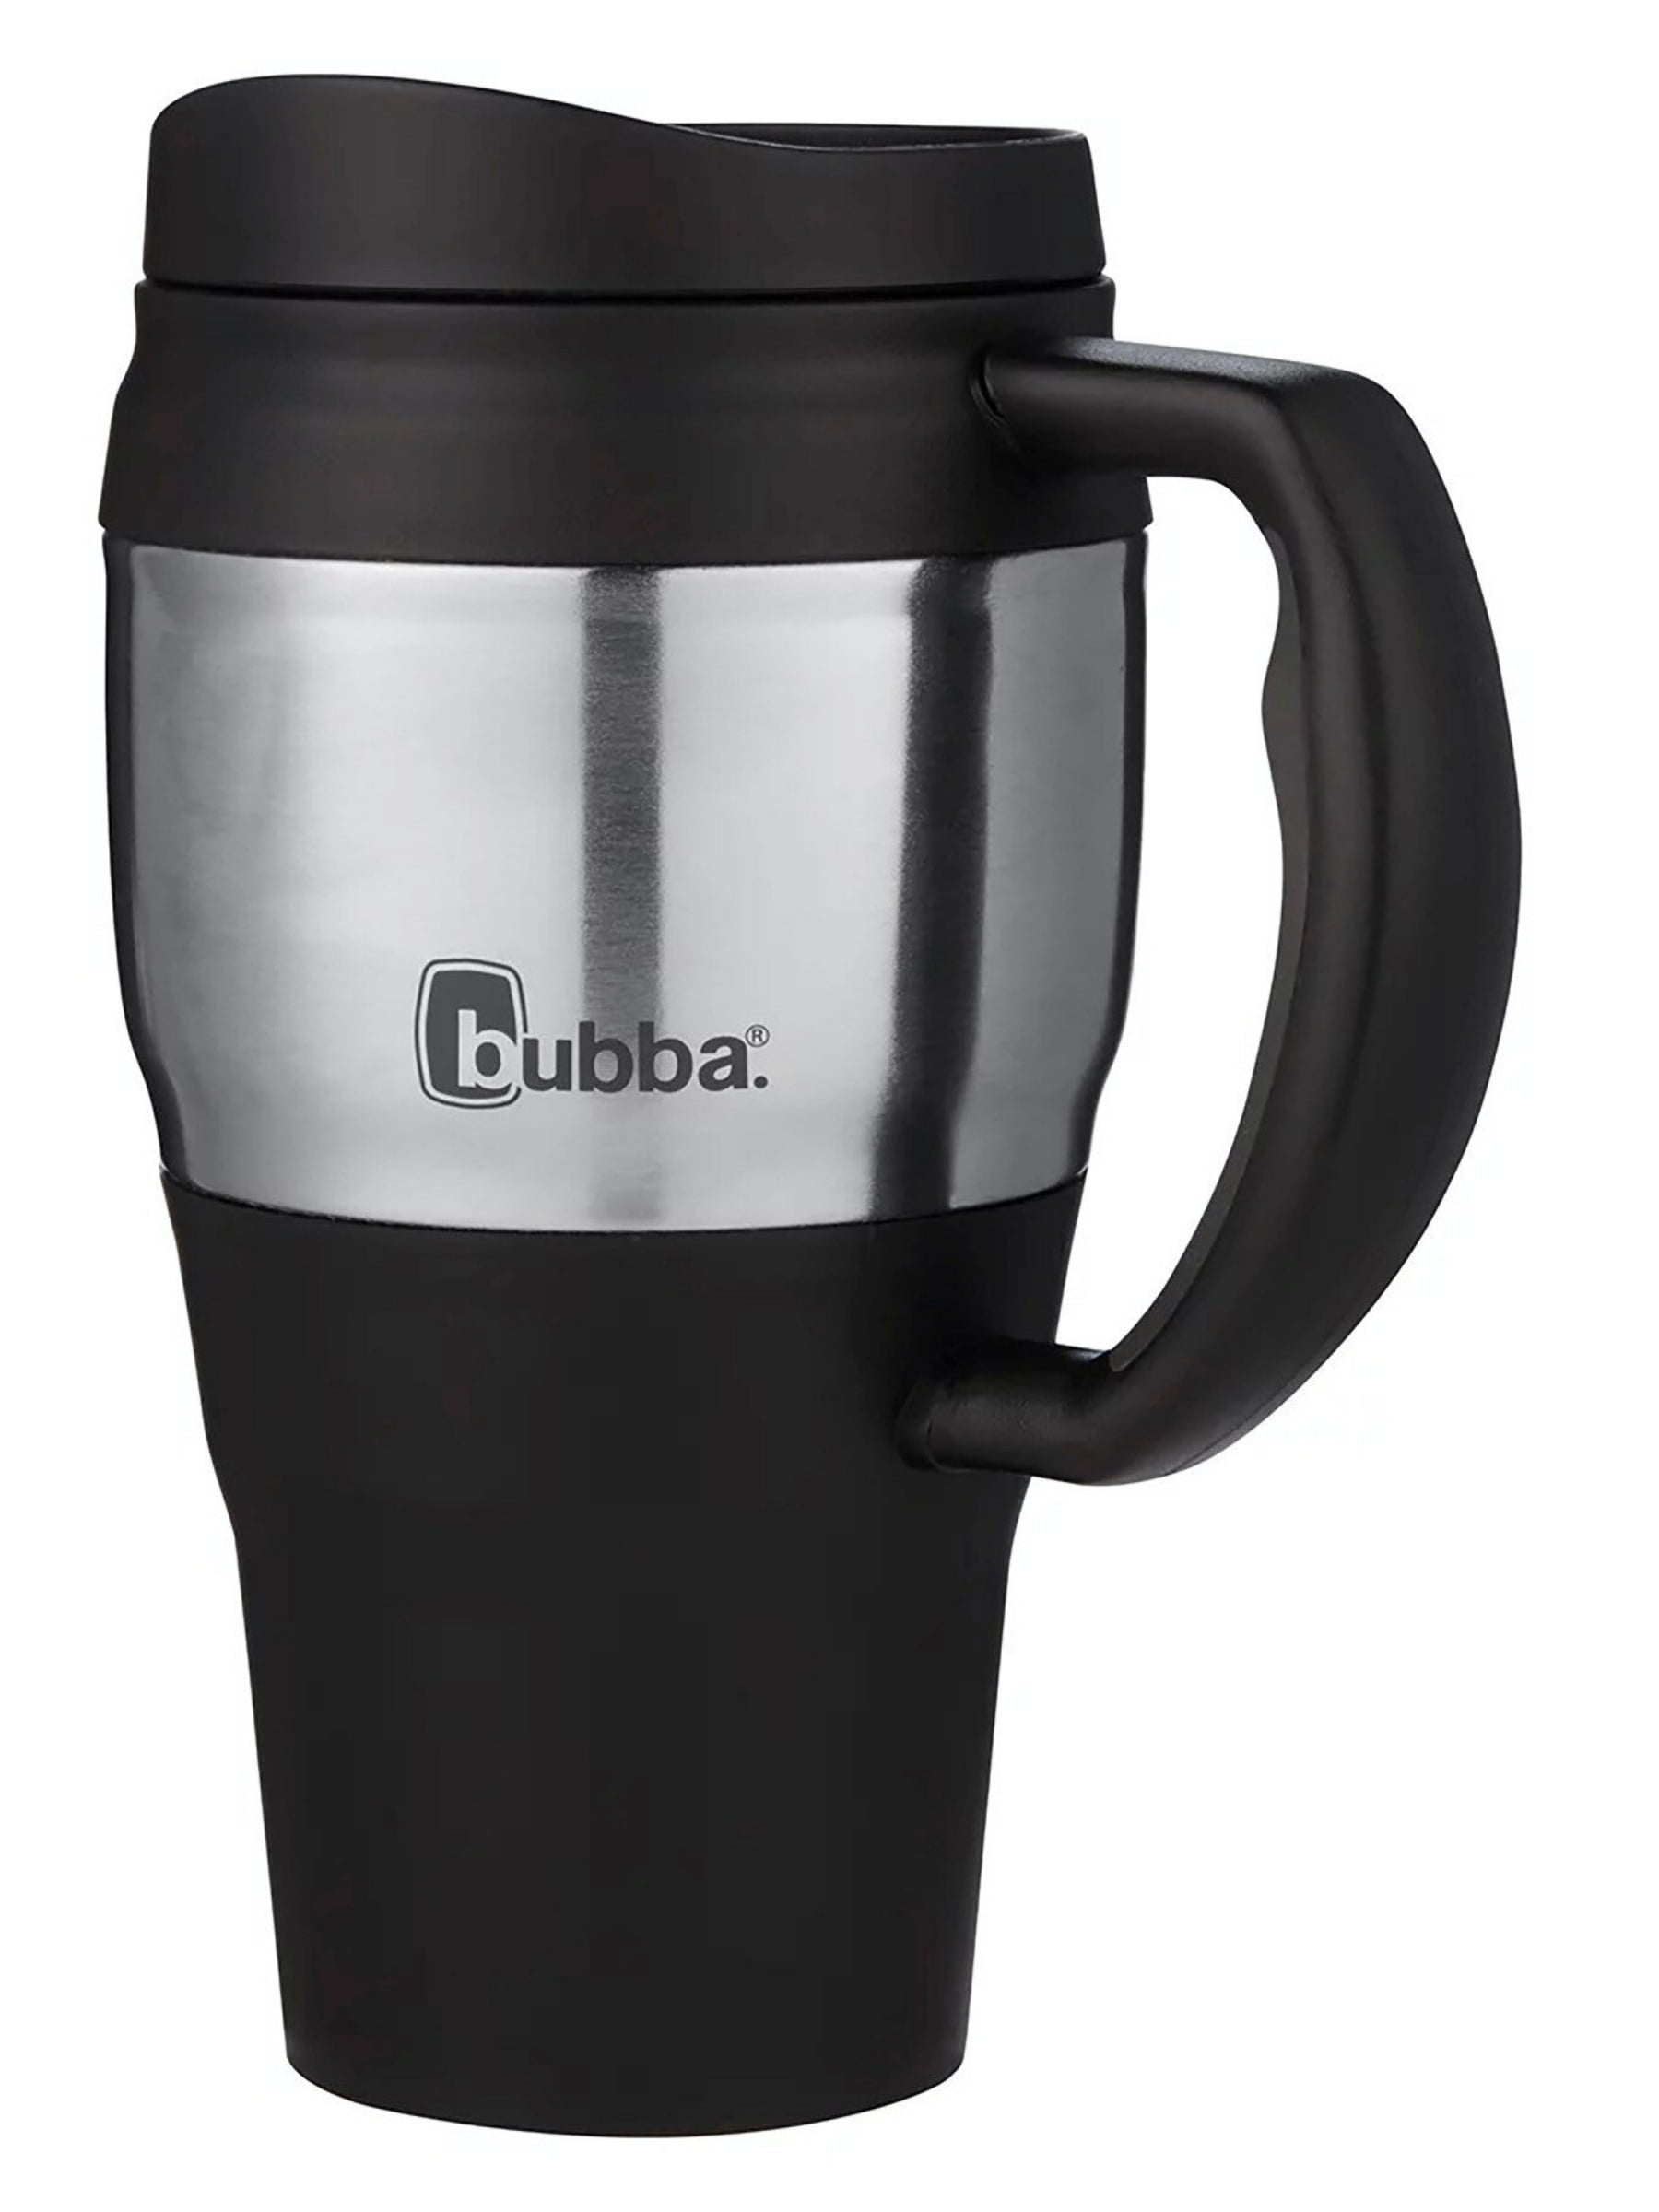 Bubba Classic Insulated Travel Mug, 20 oz - Eclipse/Teal